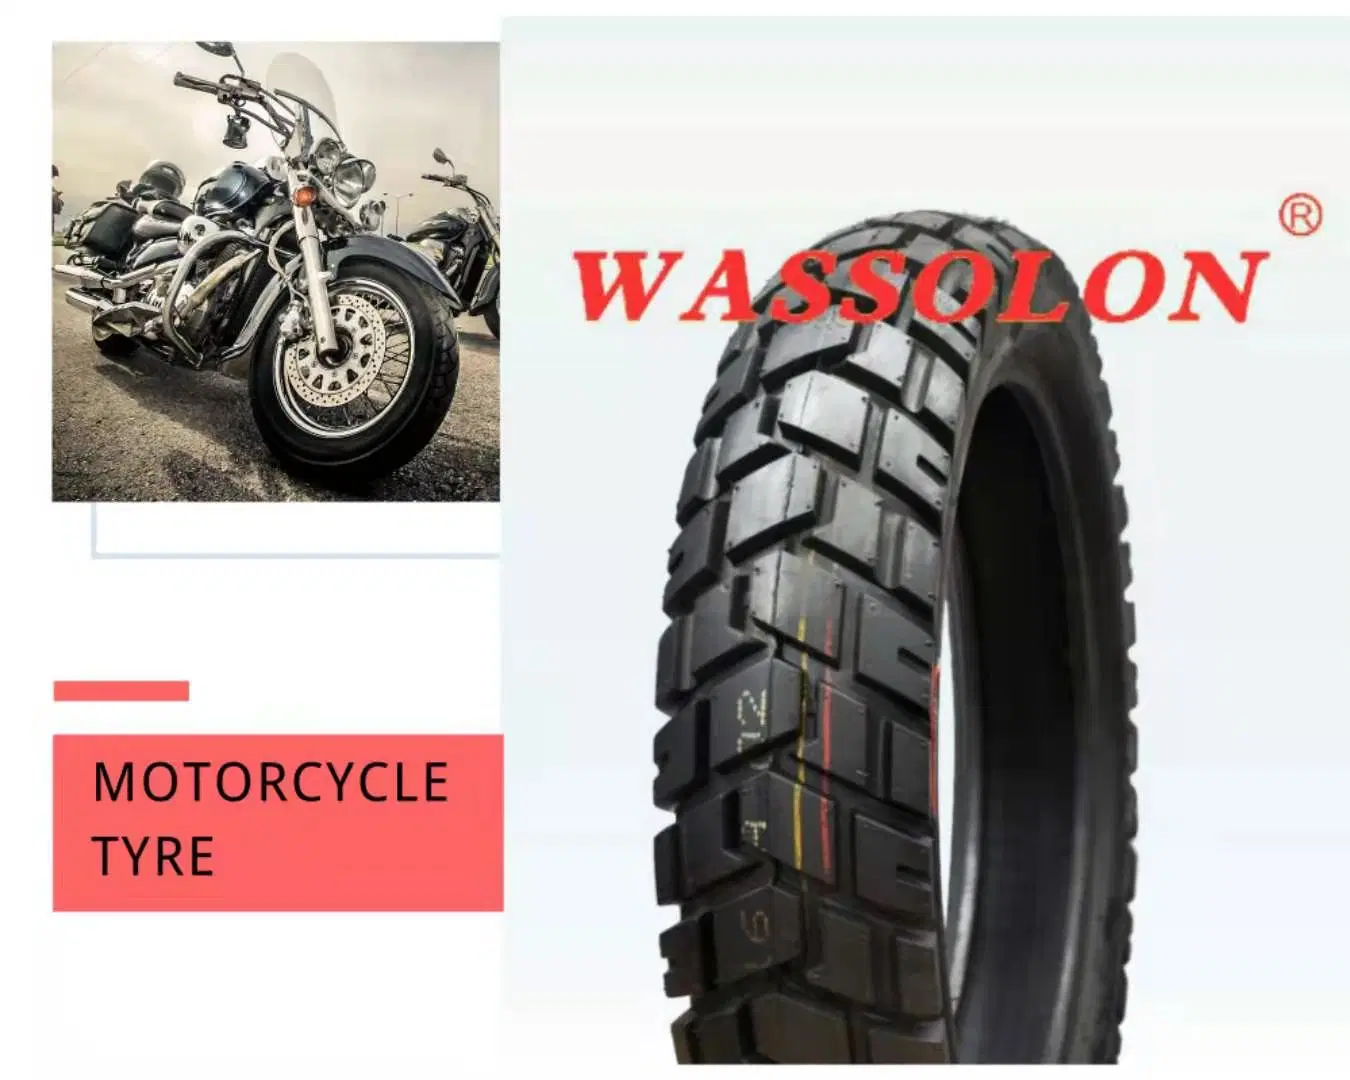 Reaiatant Motorcycle Scooter Sapre Tubeless Rubber Wheel Natural 8pr Nylon Tire/Tyre